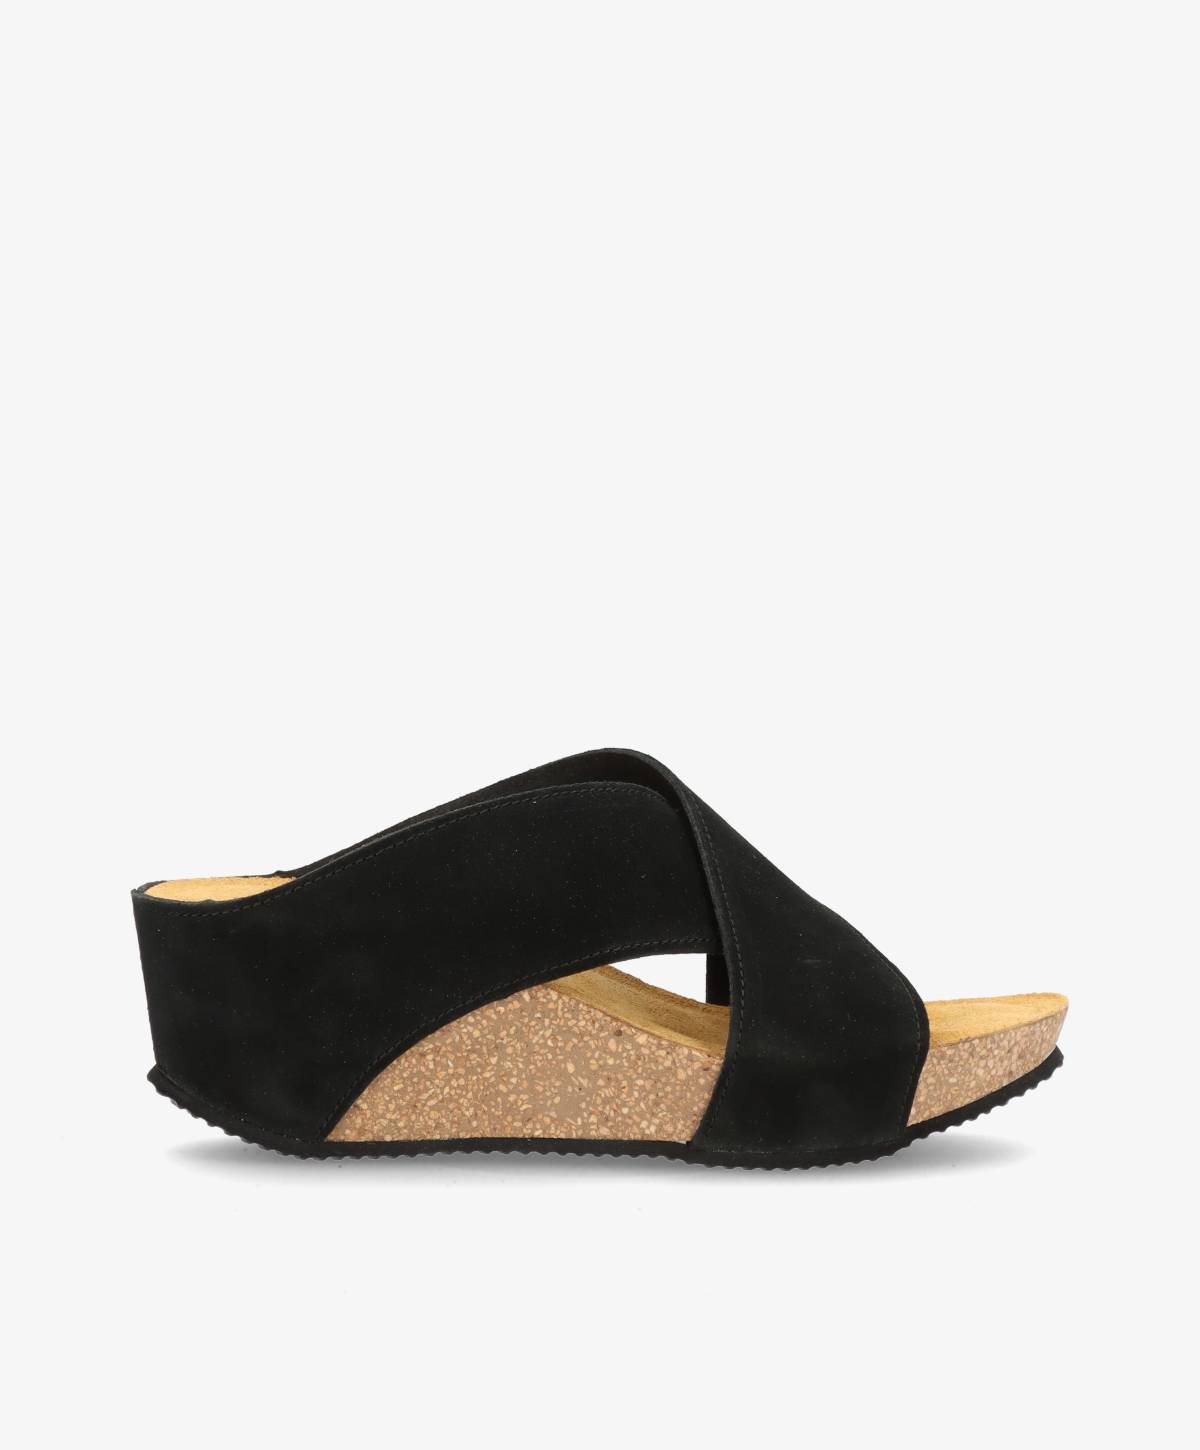 Shoedesign Copenhagen Shadow sandal, Black Suede